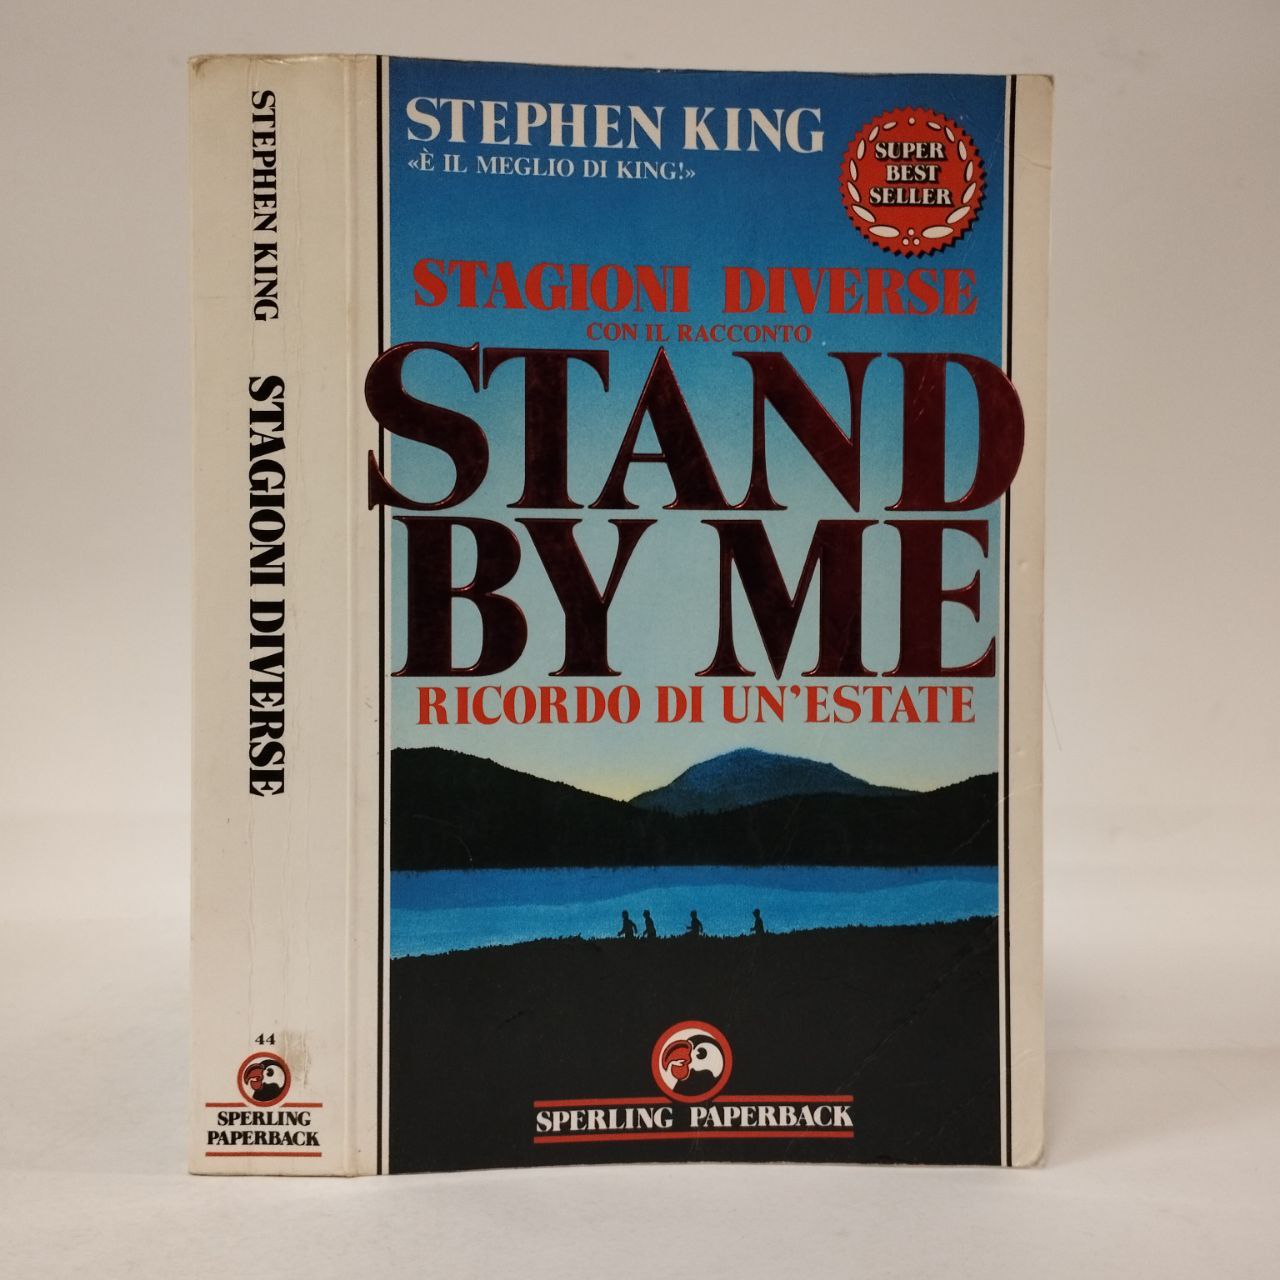 Stagioni diverse con il racconto Stand By Me. King Stephen. Sperling &  Kupfer, 1990. - Equilibri Libreria Torino